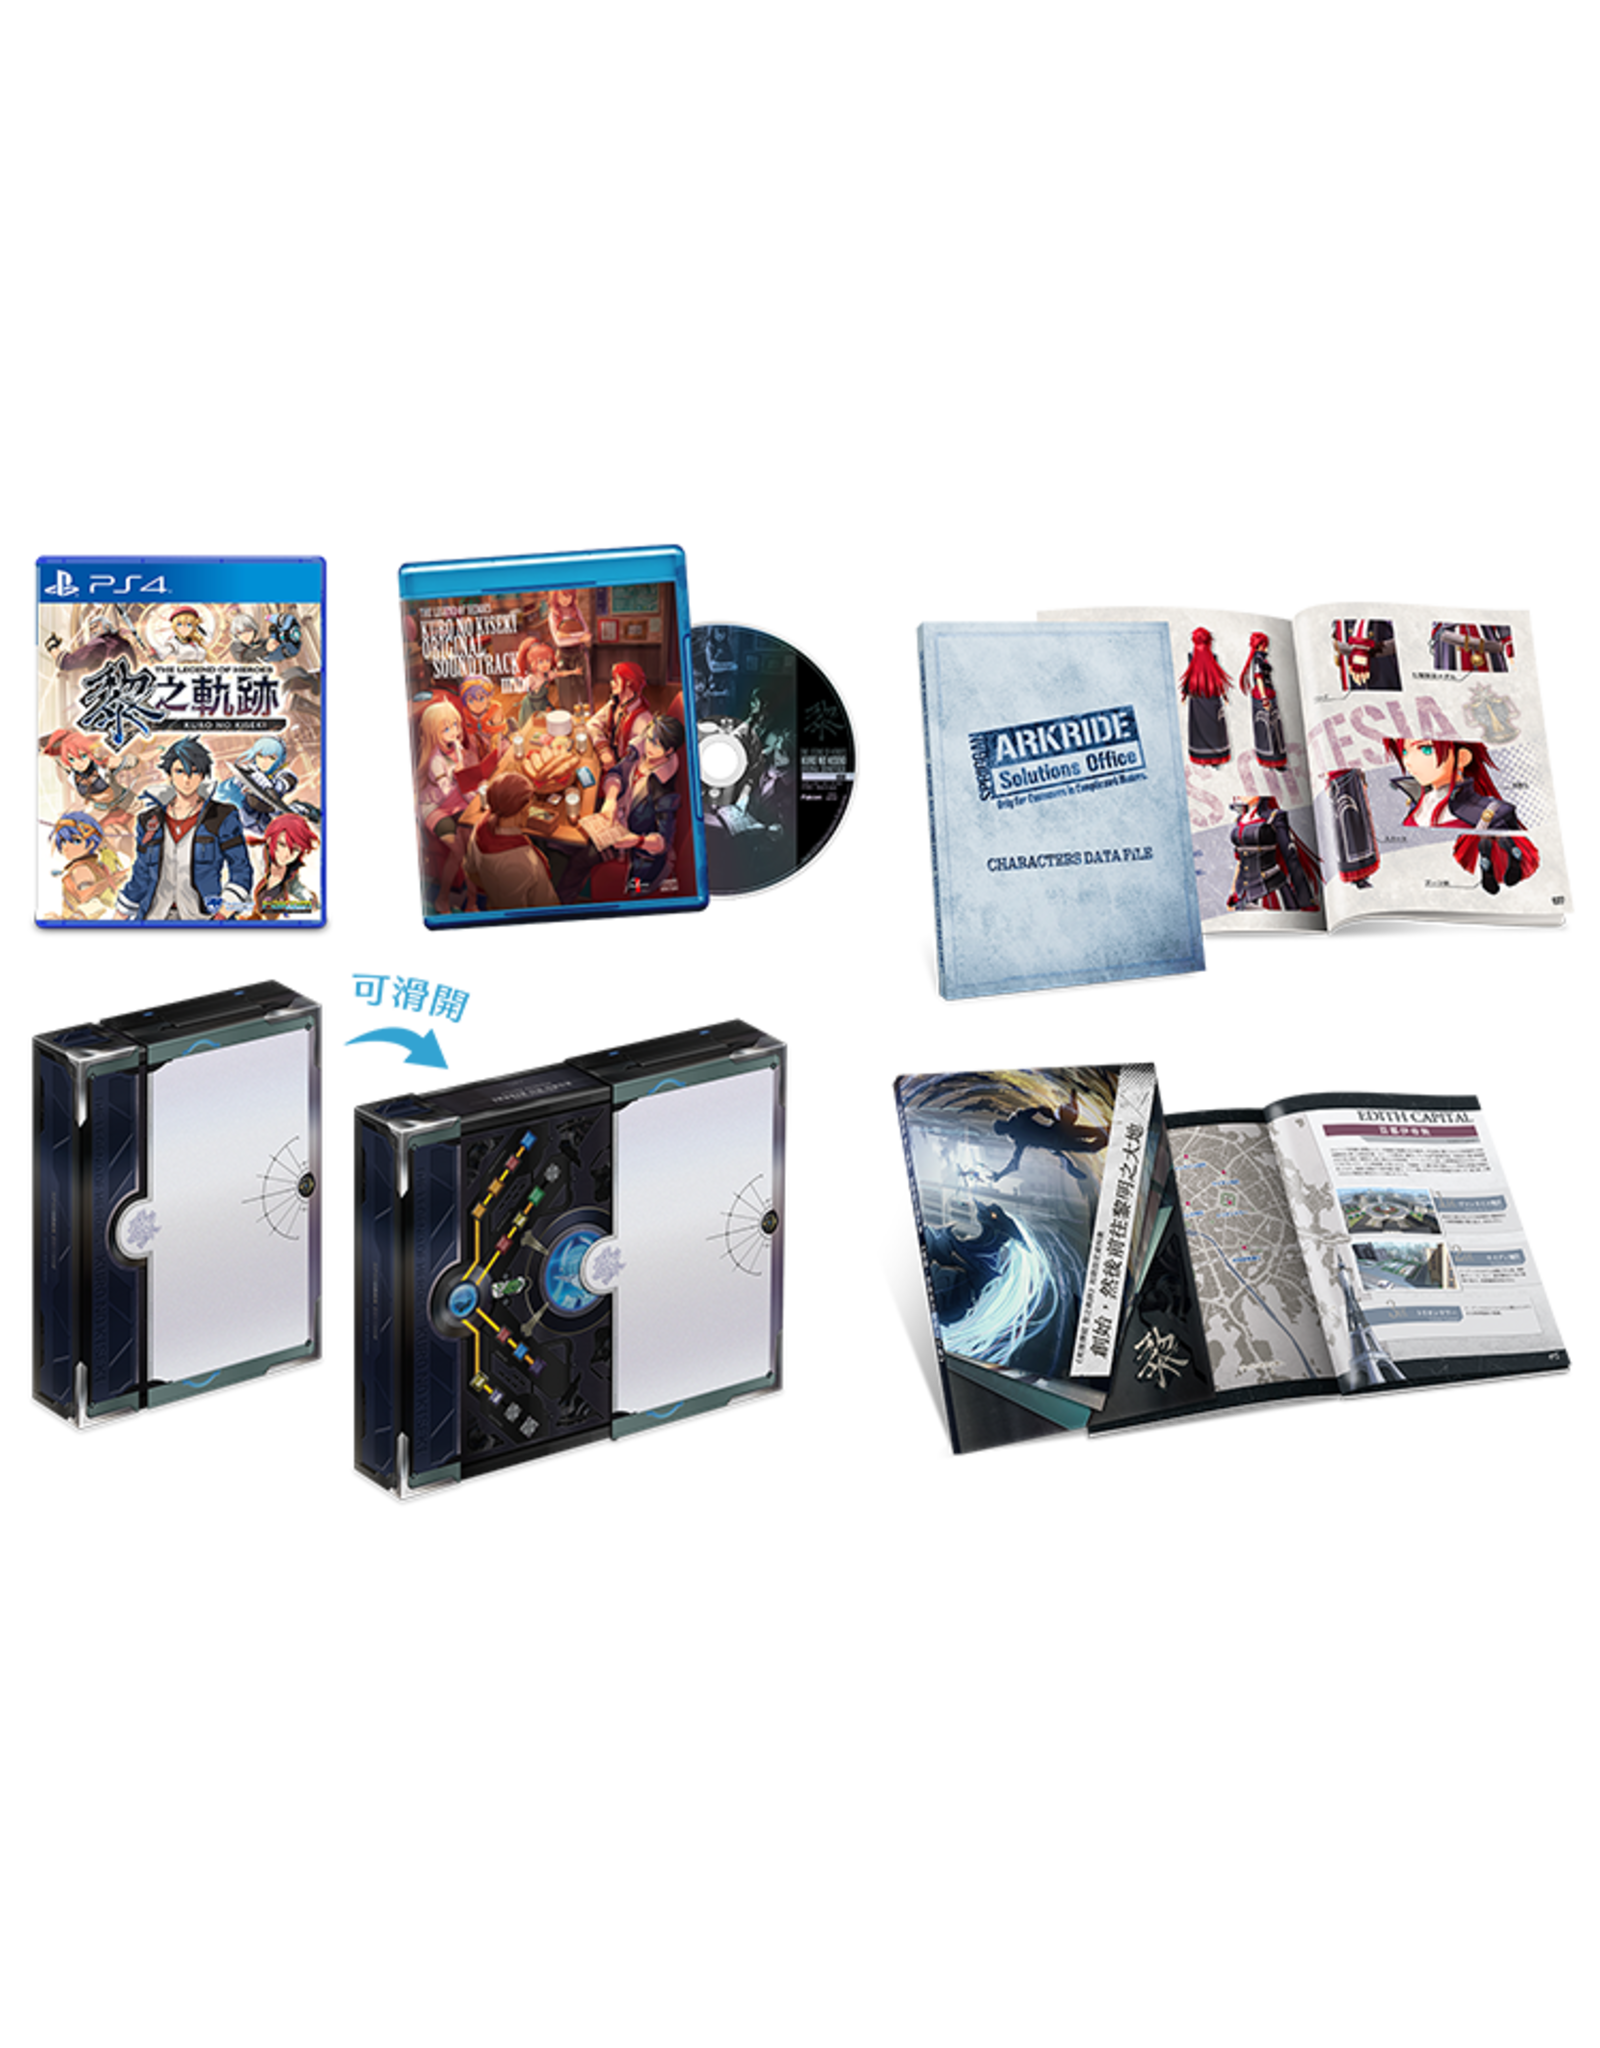 Playstation 4 Legend of Heroes: Kuro no Kiseki Spriggan Edition (CiB, Game Sealed, JP Import)